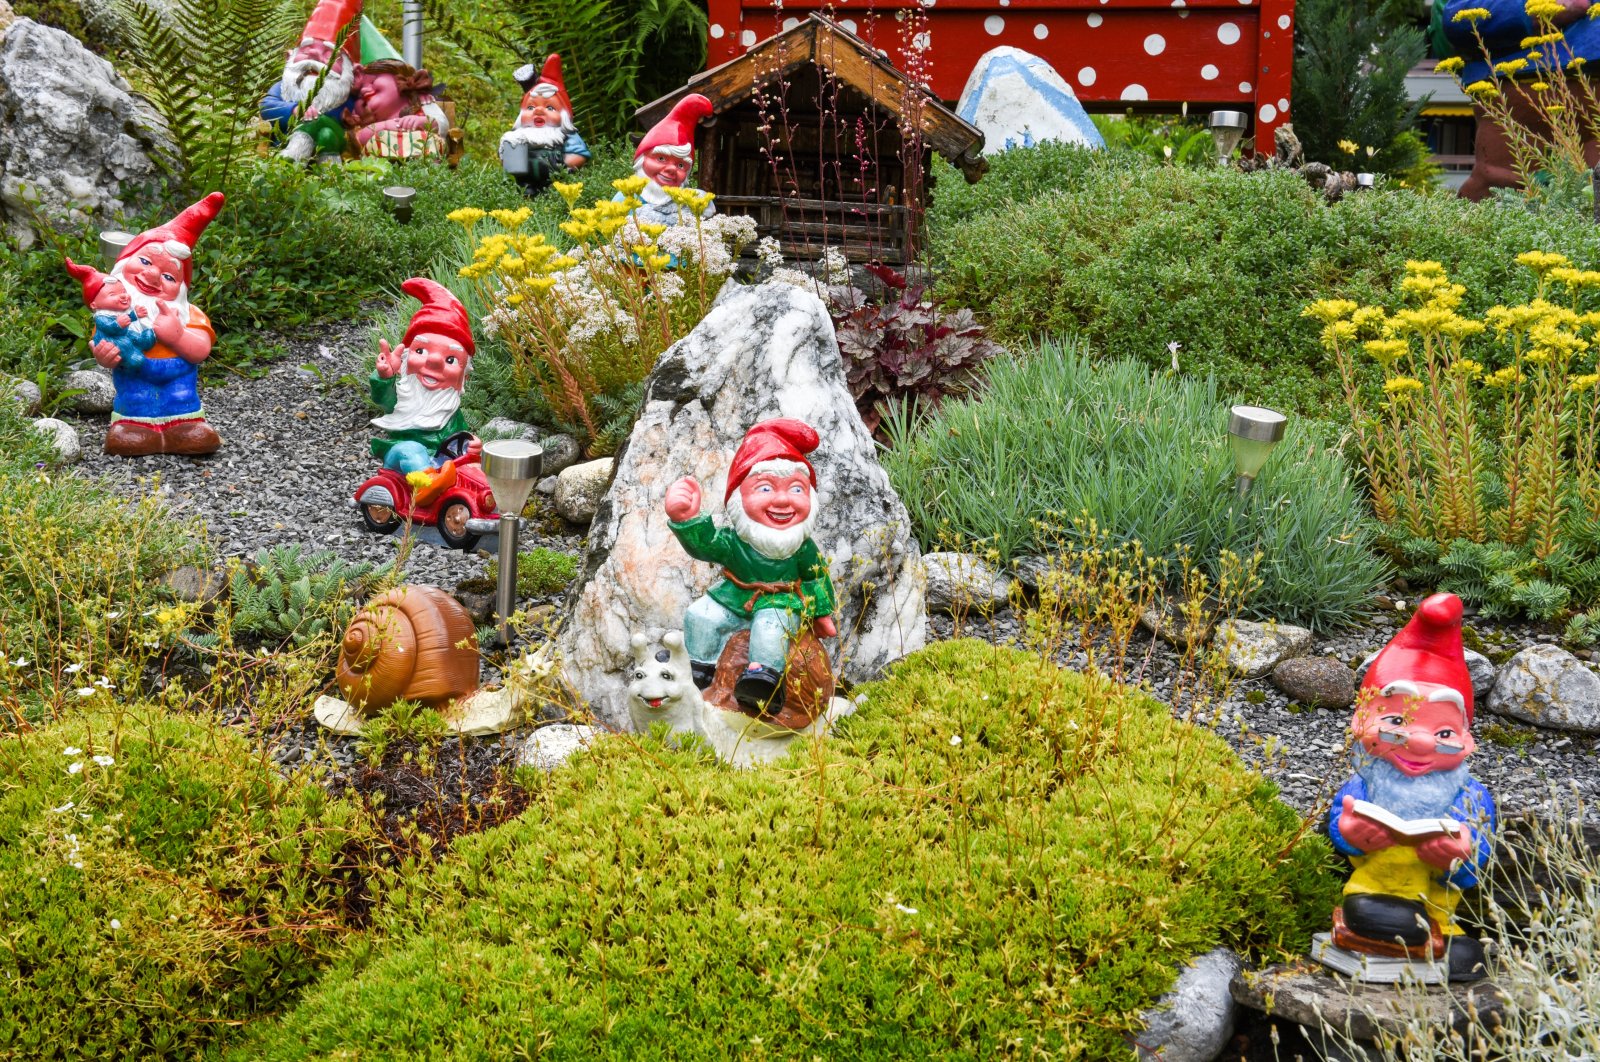 Garden gnome: Kisah budaya di balik patung-patung ornamen halaman